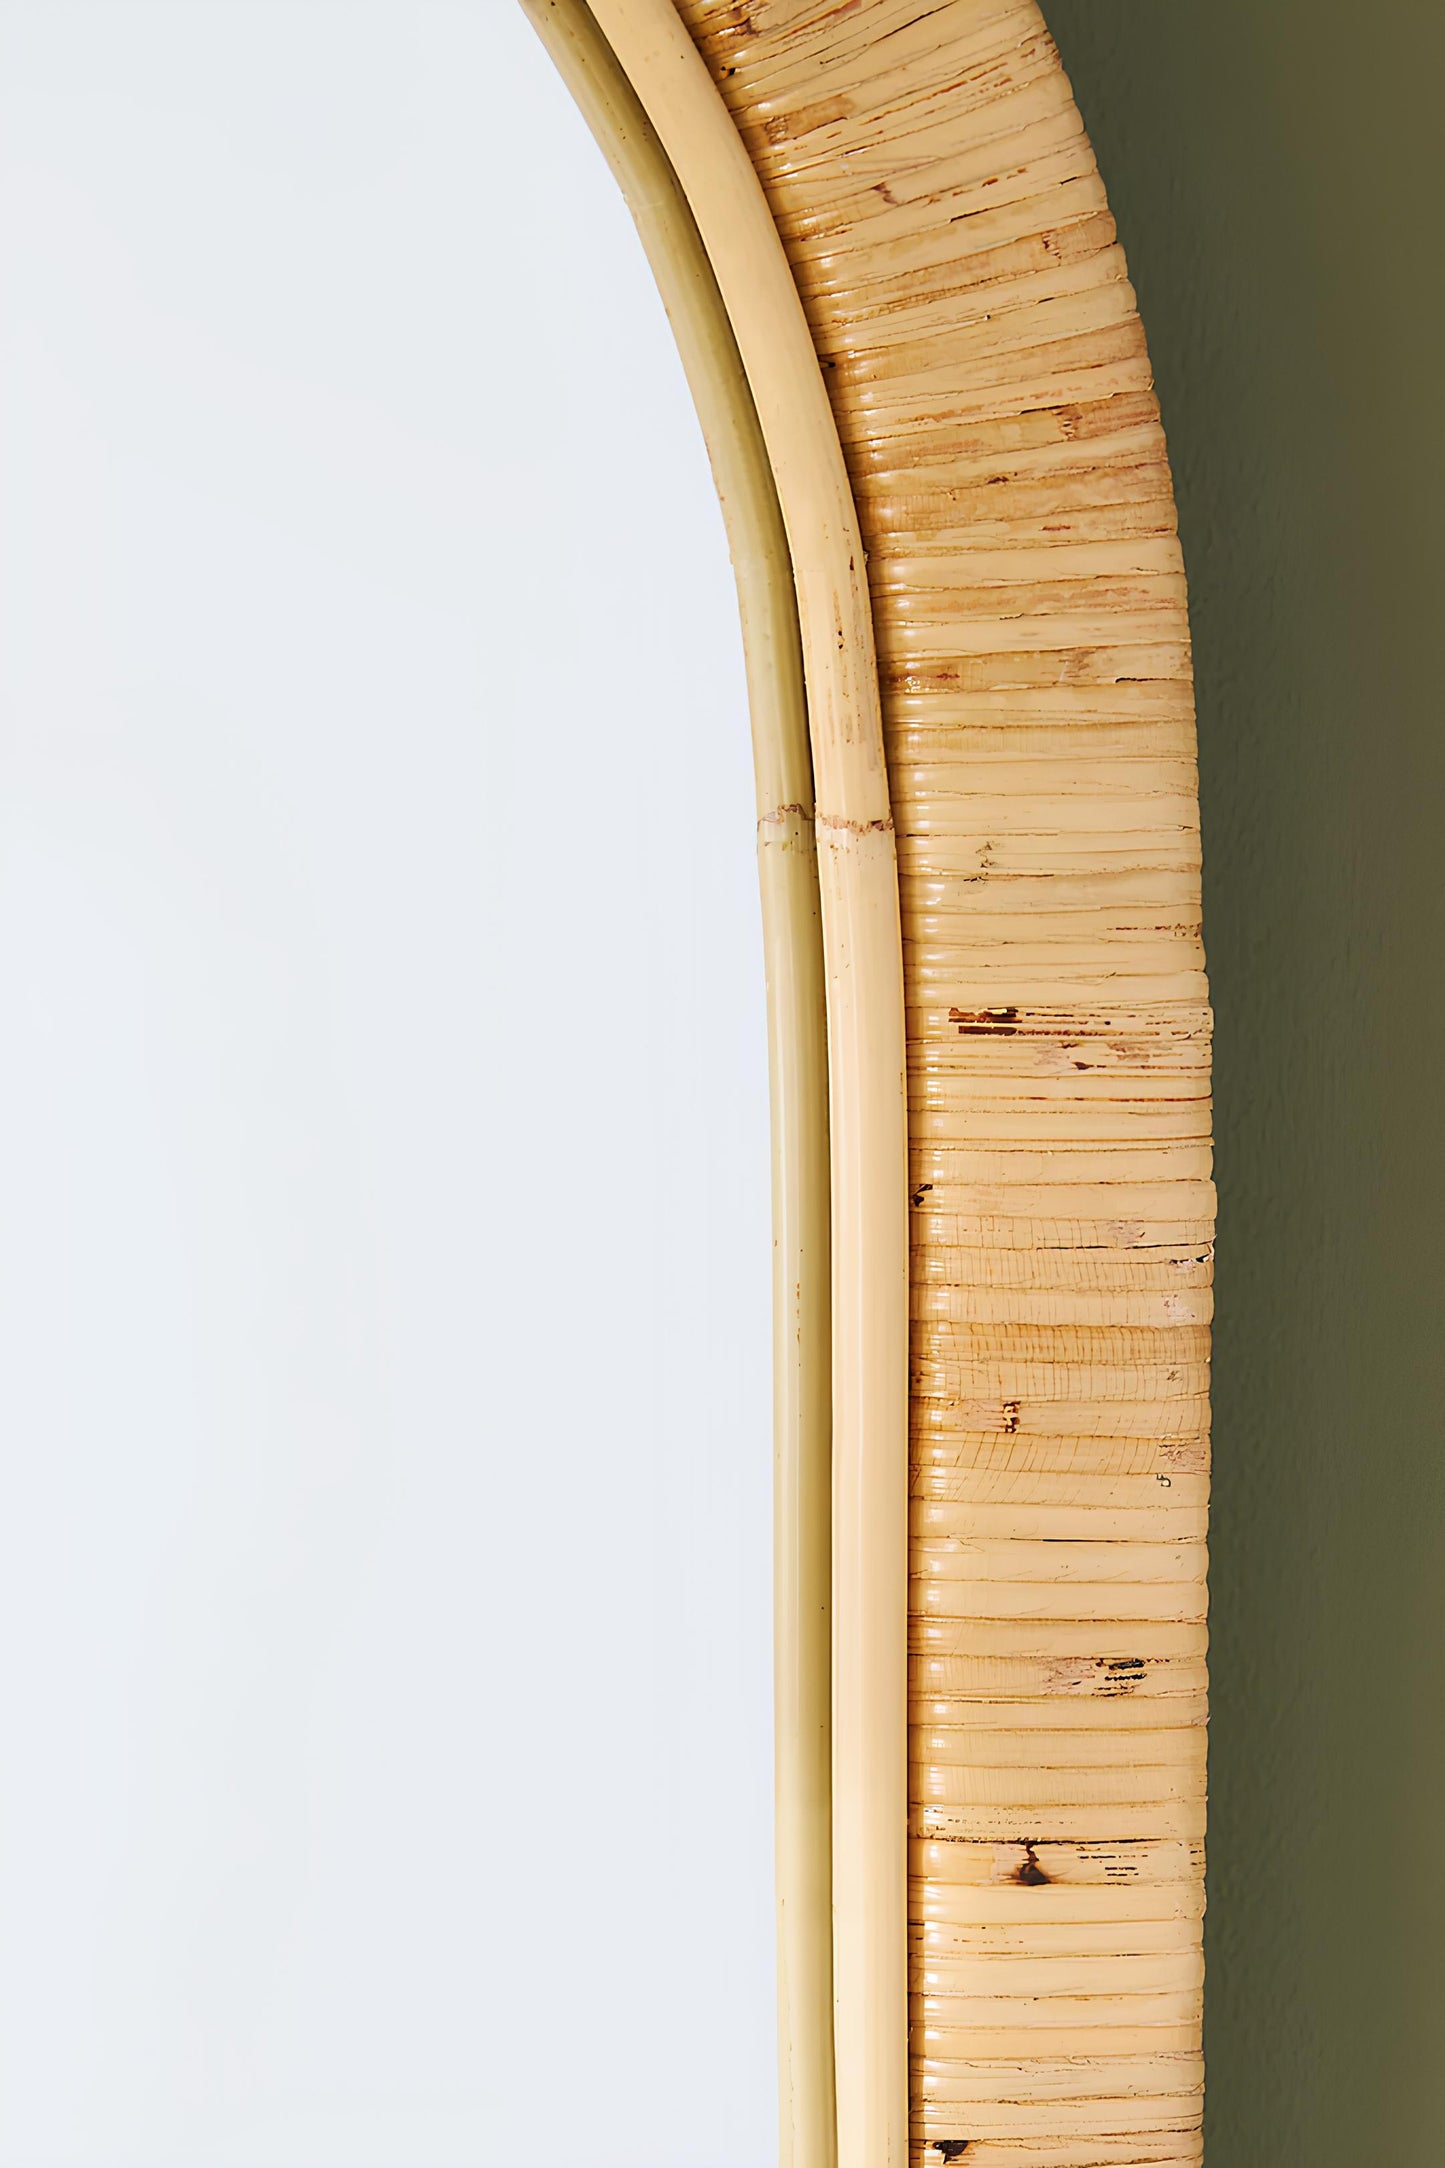 Bamboo Wall Mirror for living room | Cane Wall Mirror | Rattan Mirror - Hrida - Akway